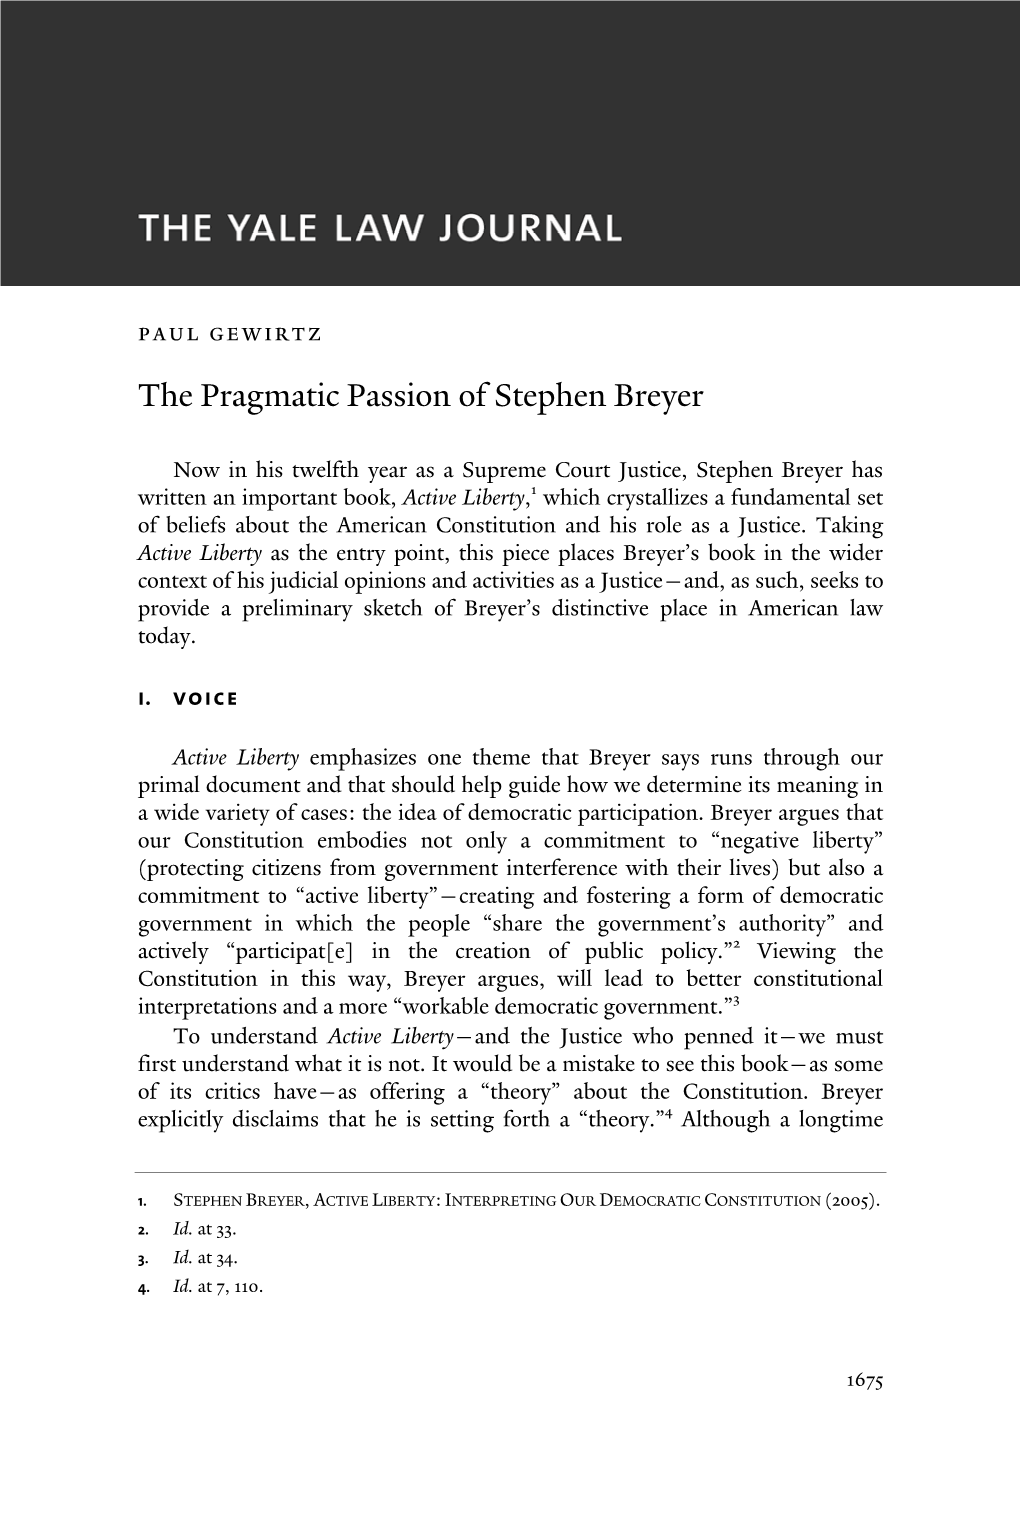 The Pragmatic Passion of Stephen Breyer